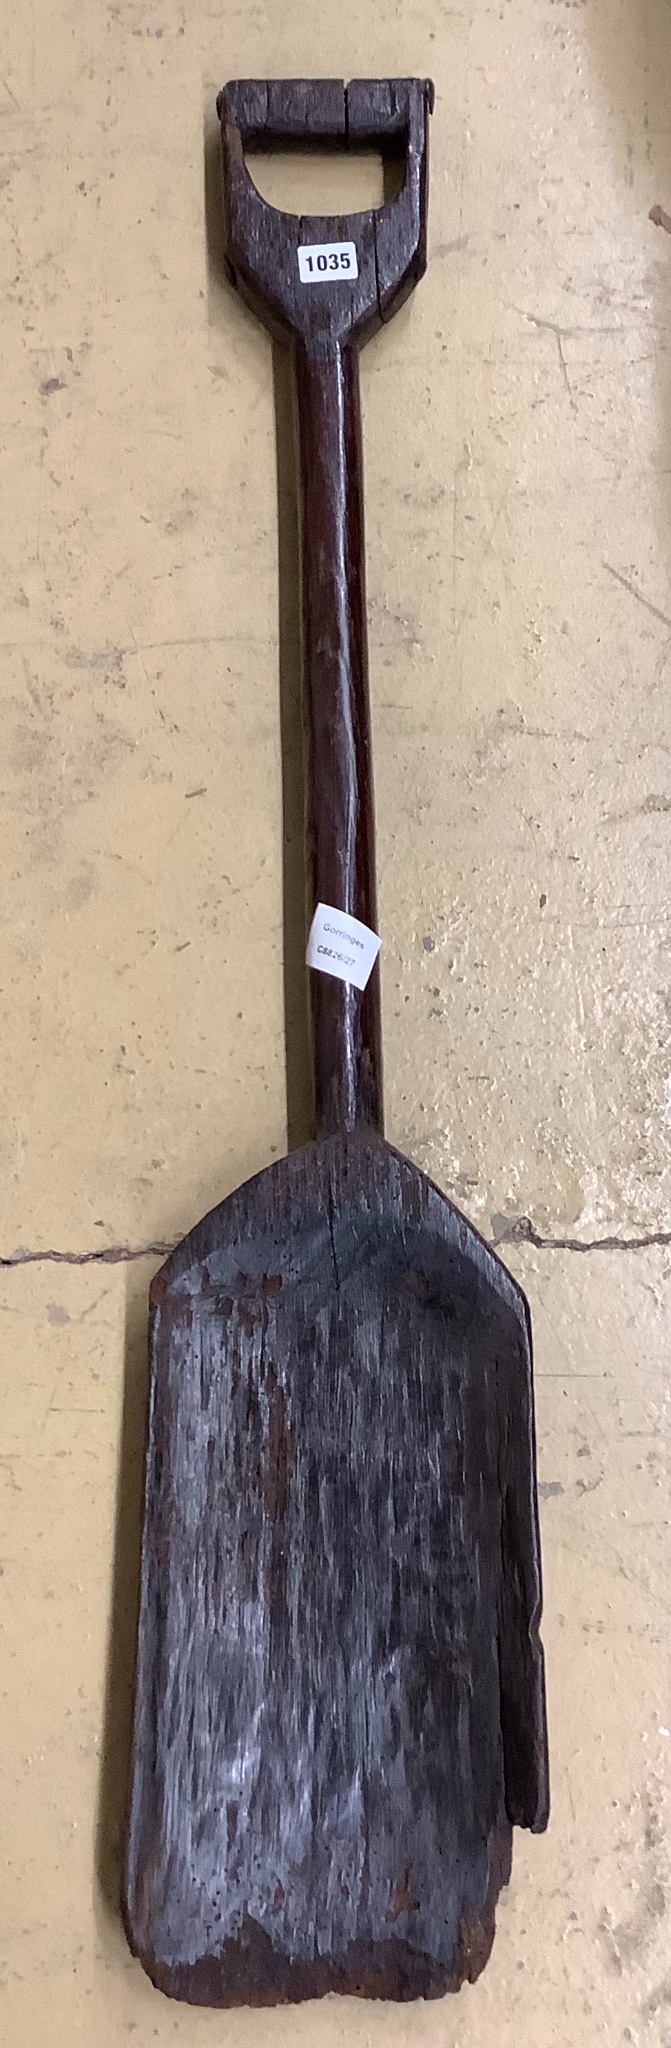 A 19th century malt shovel